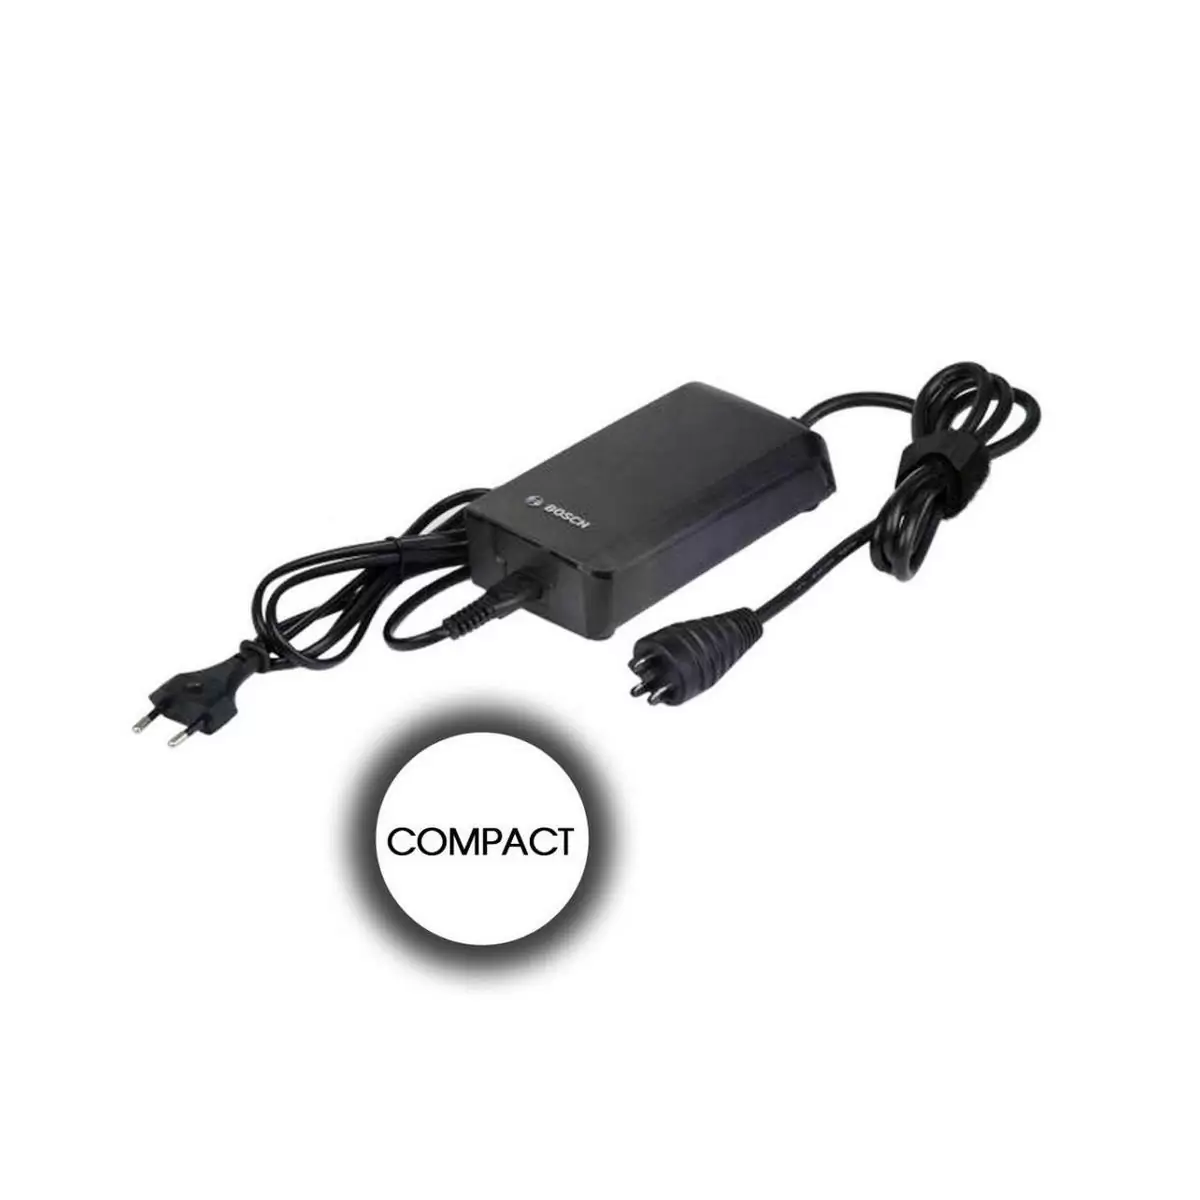 cargador de baterias compacto 2a rendimiento activo enchufe cable europeo - image